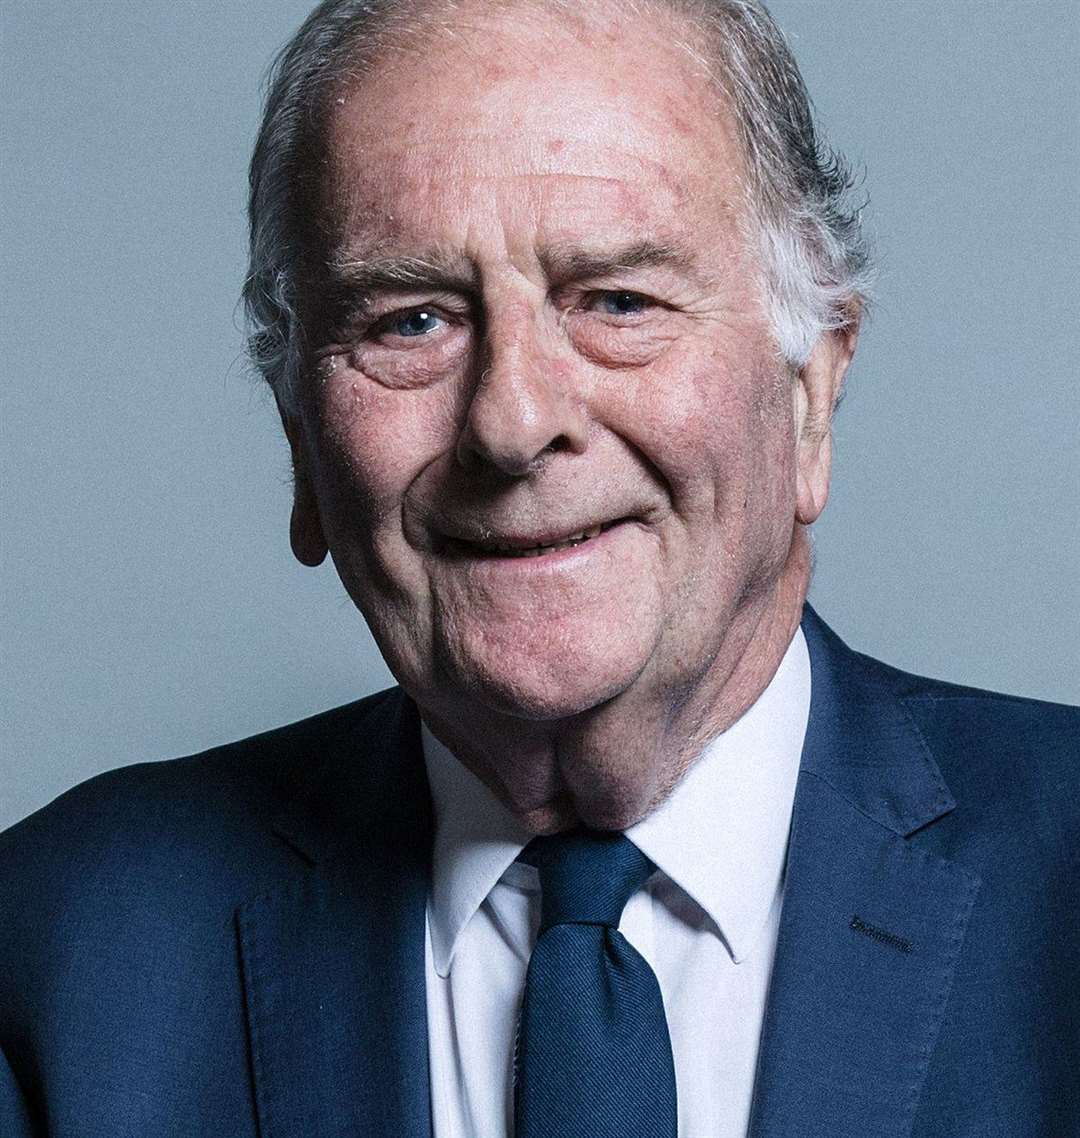 MP Sir Roger Gale